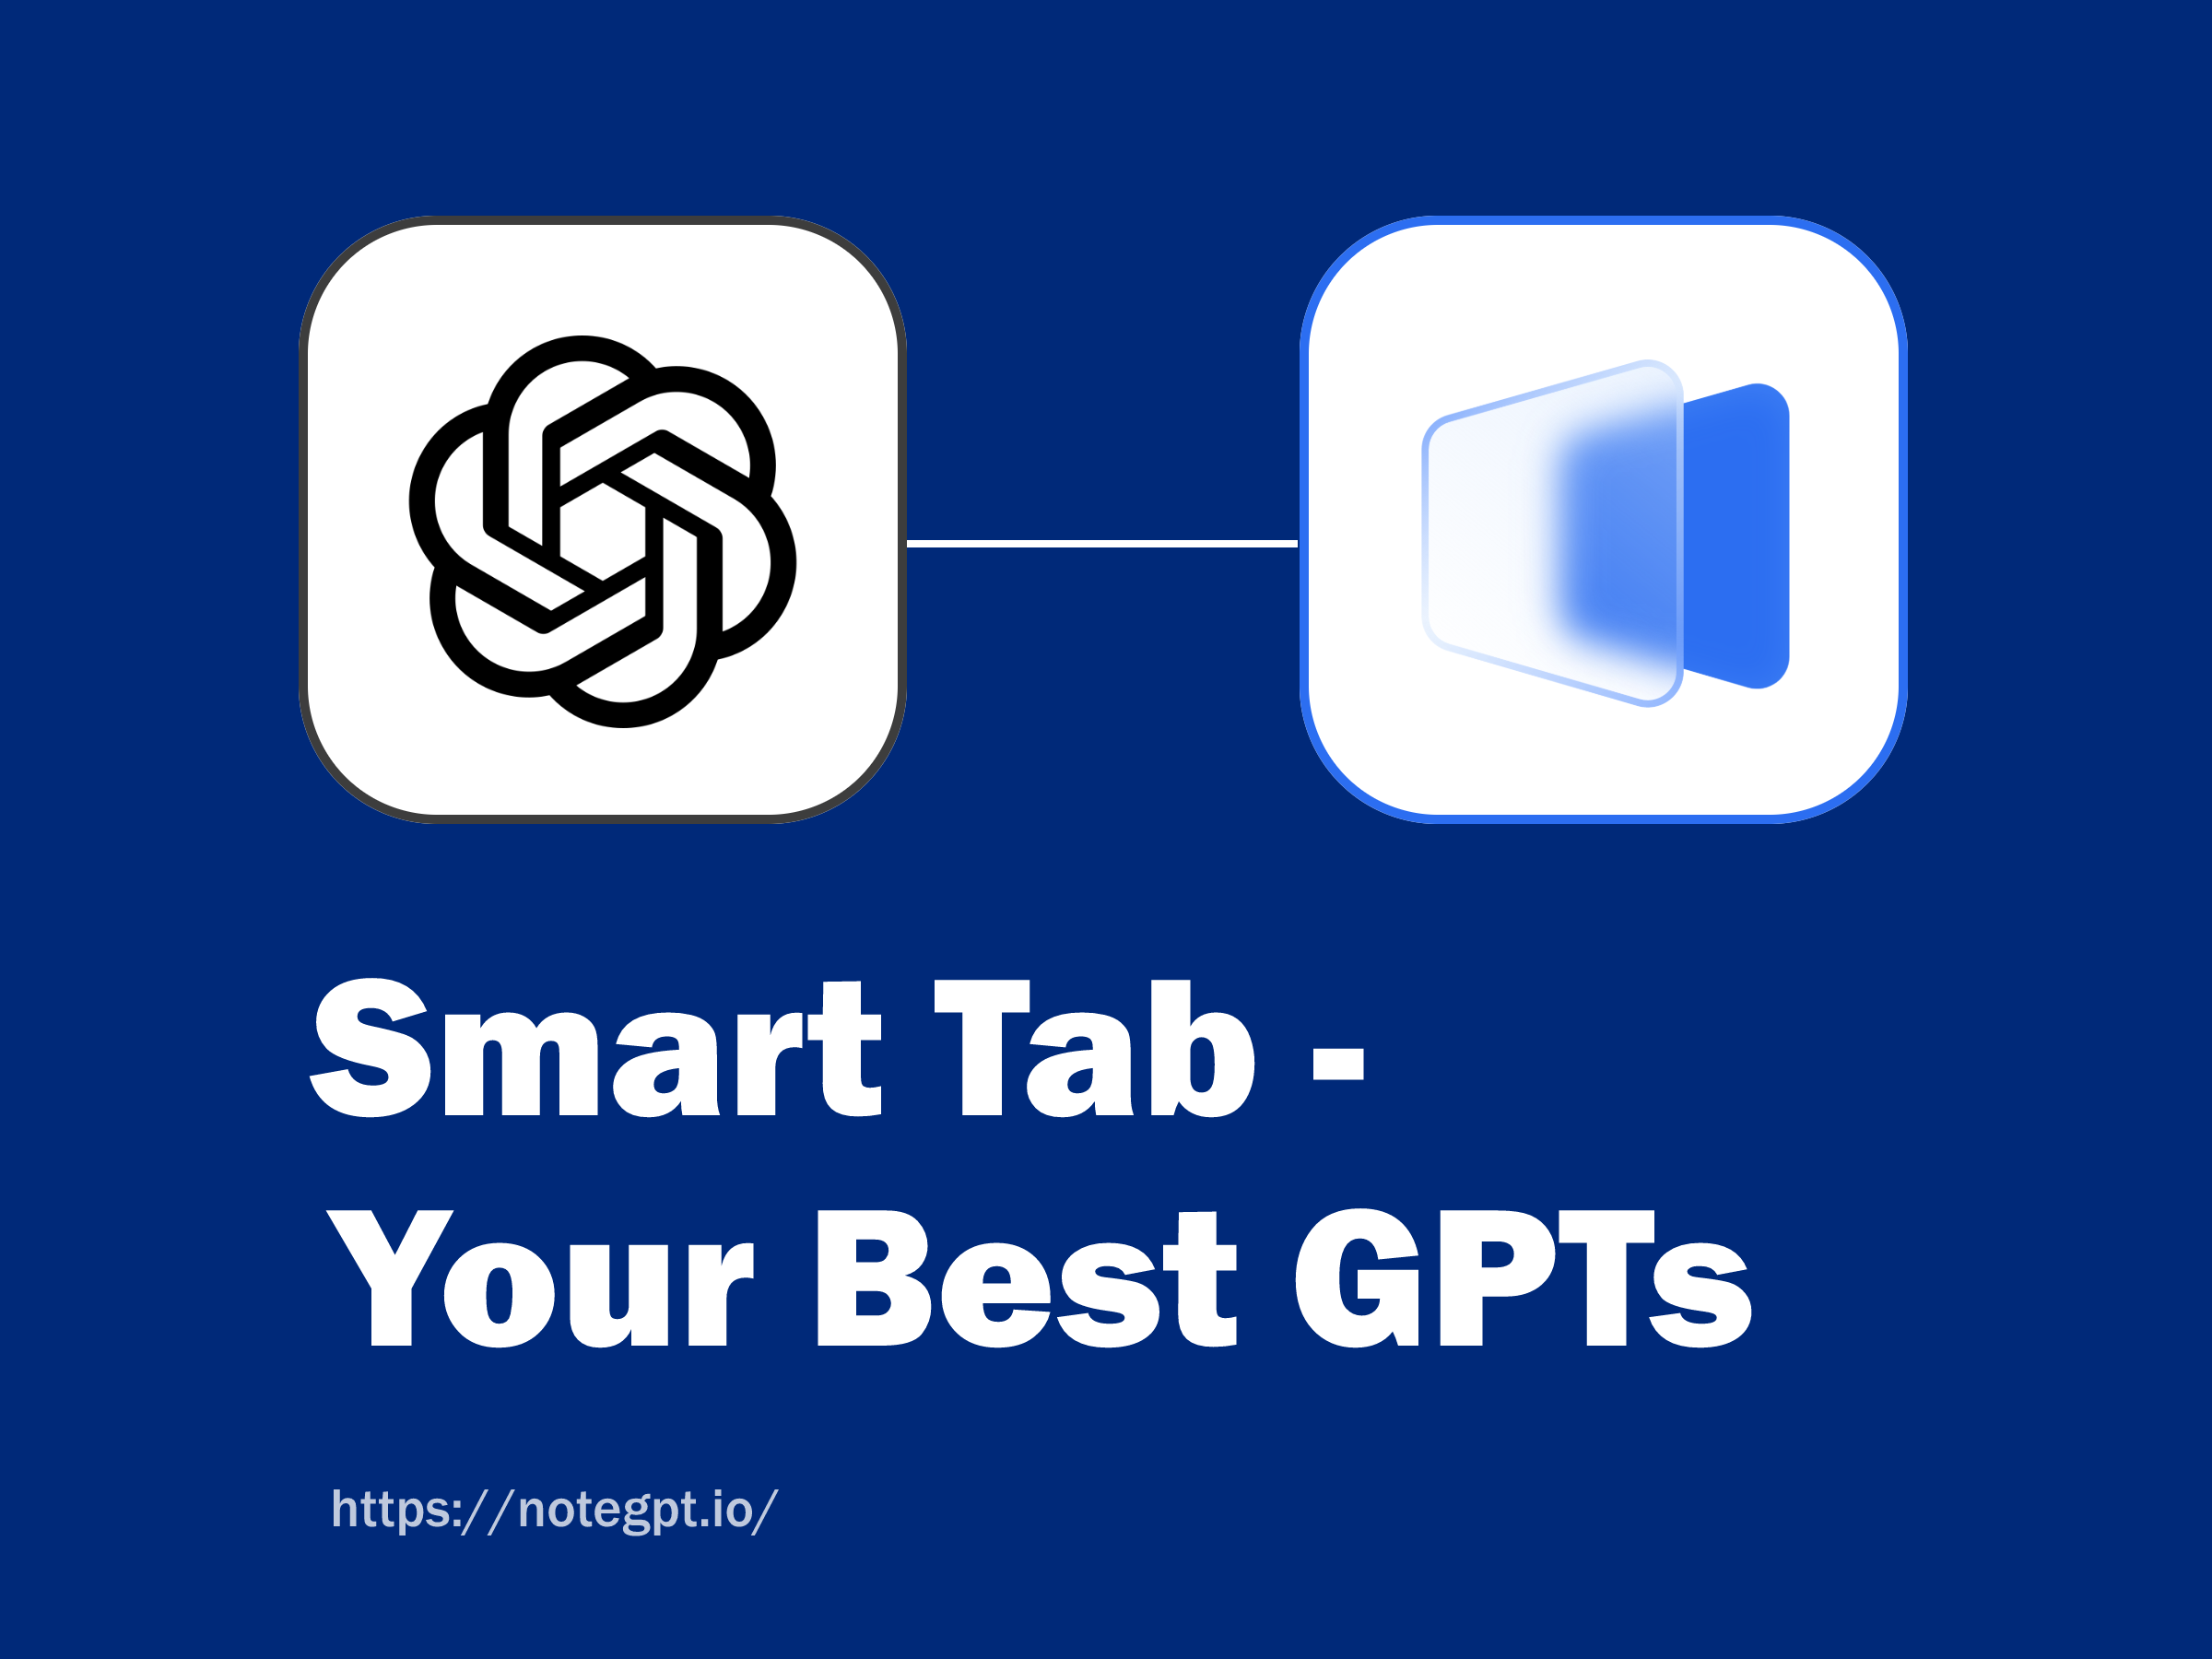 GPTs，NoteGPT，Smart Tab, AI copilot